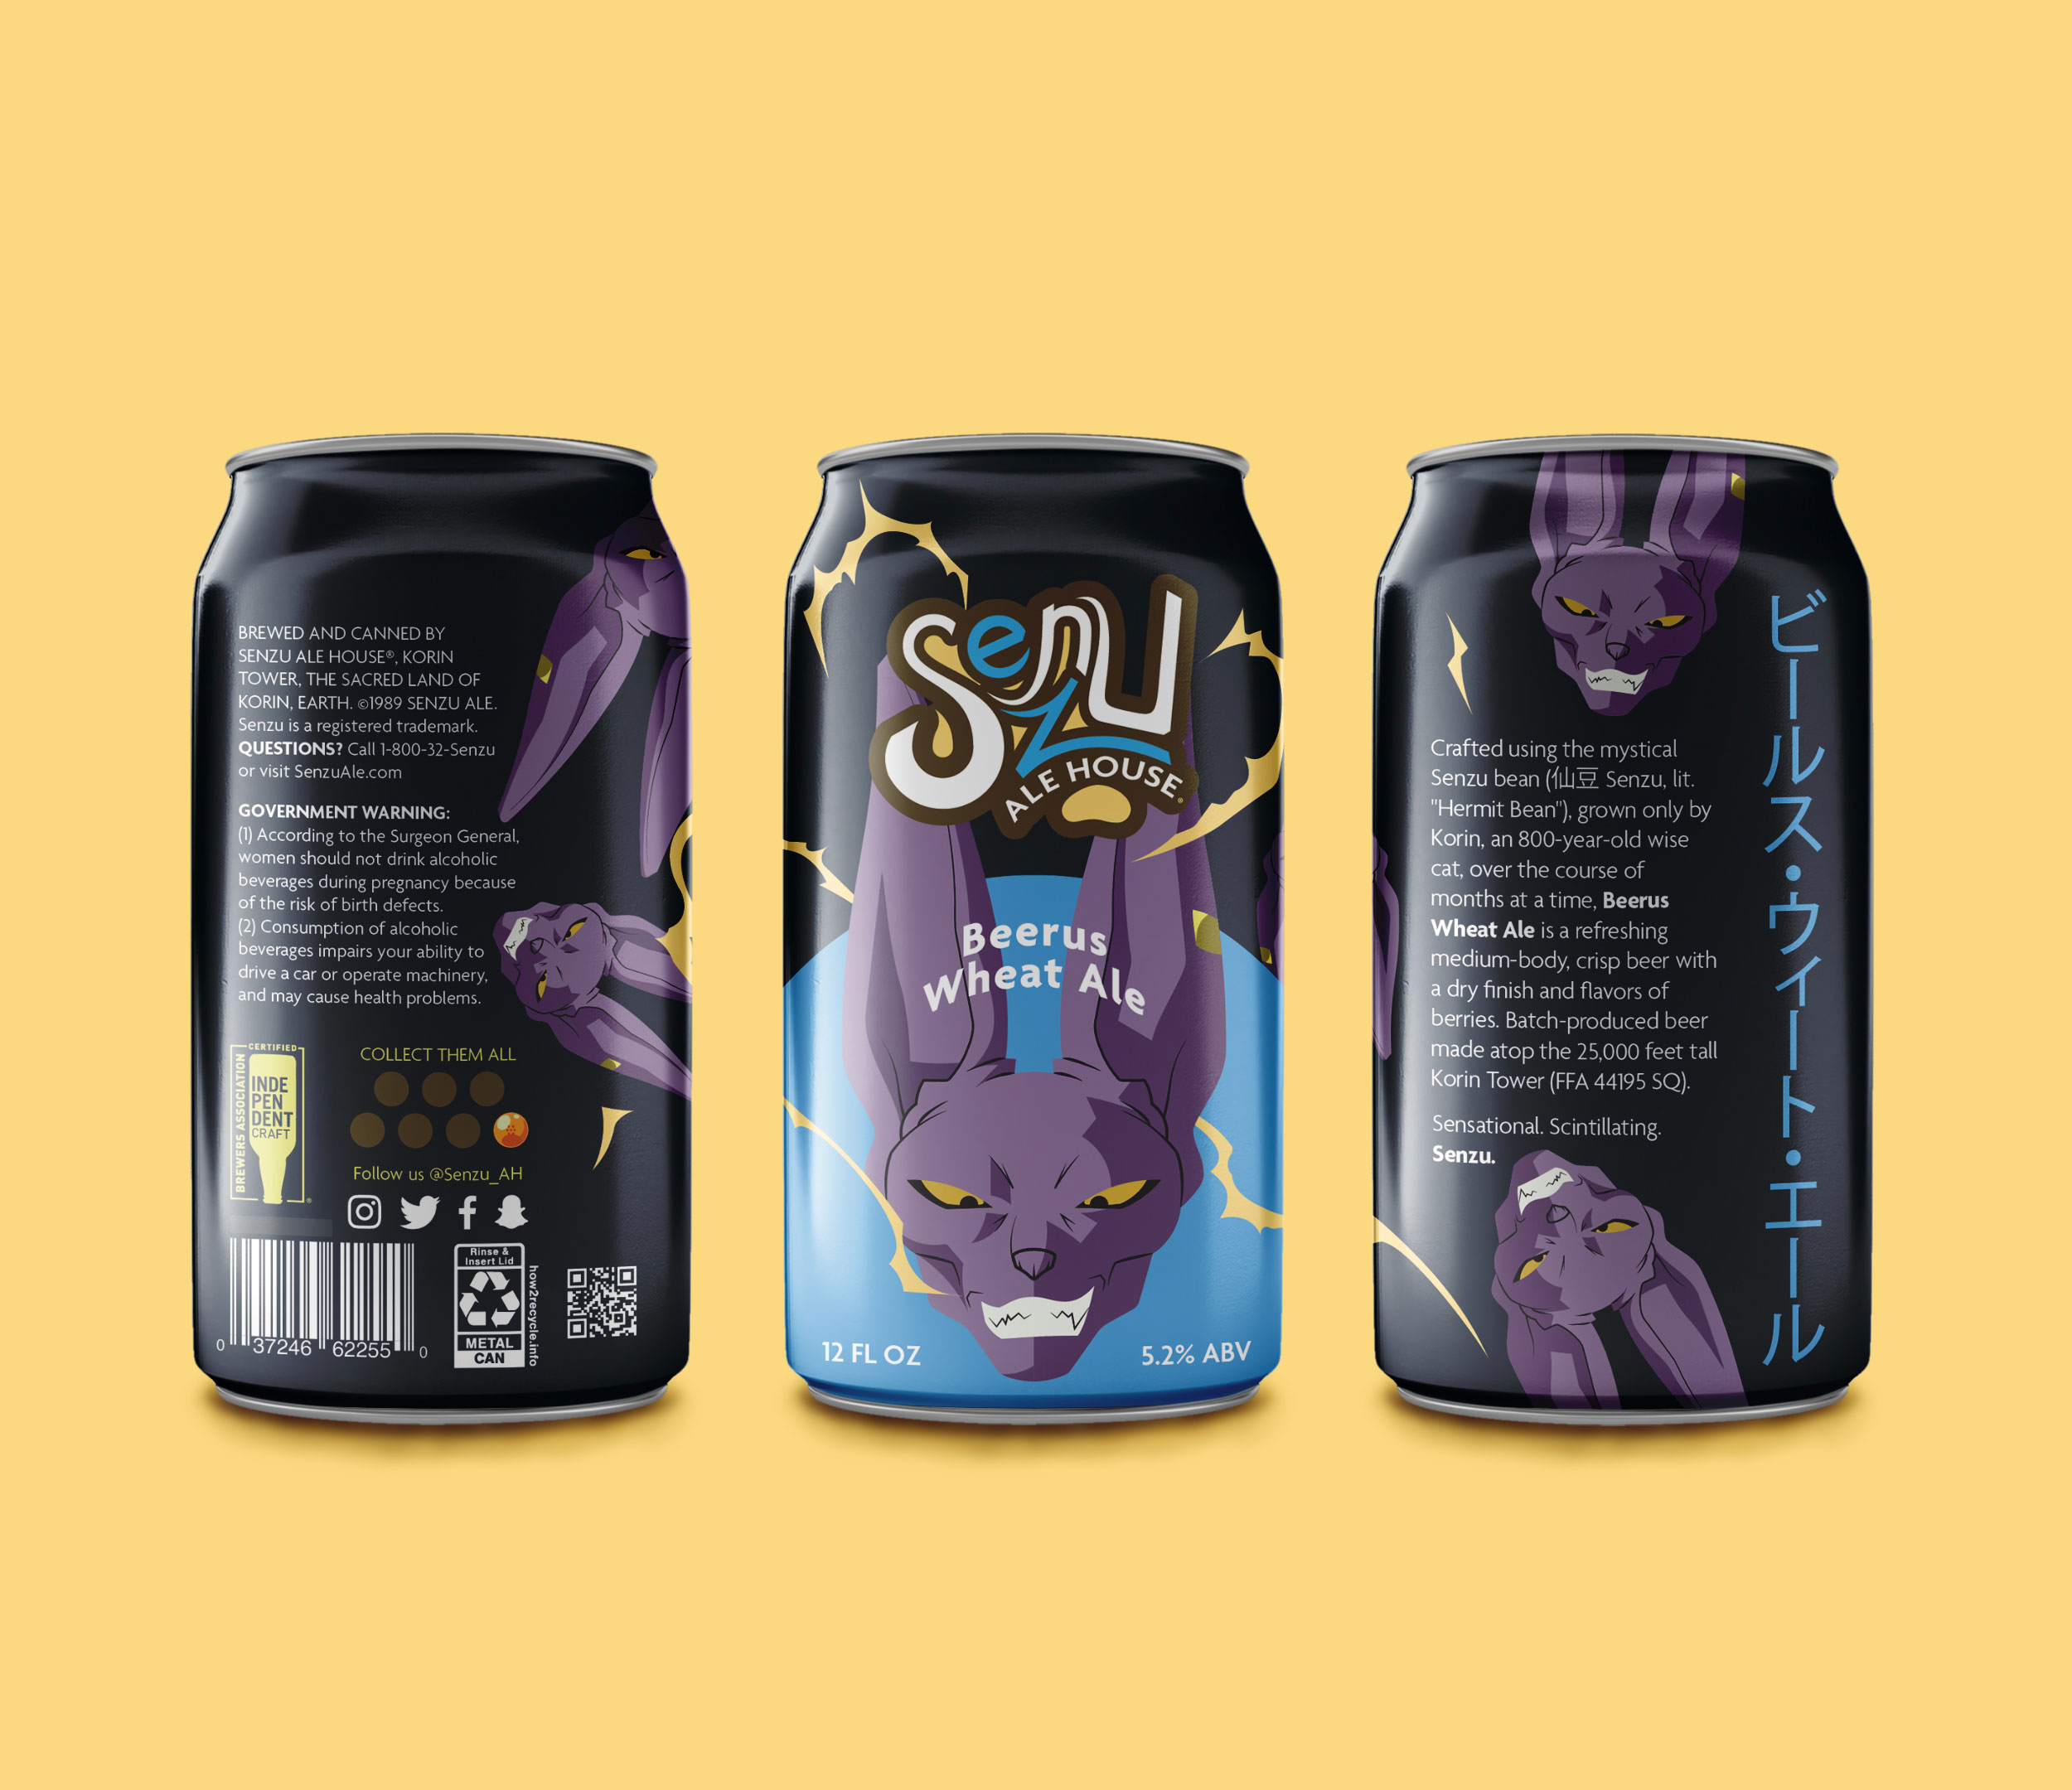 Senzu Ale House beer cans